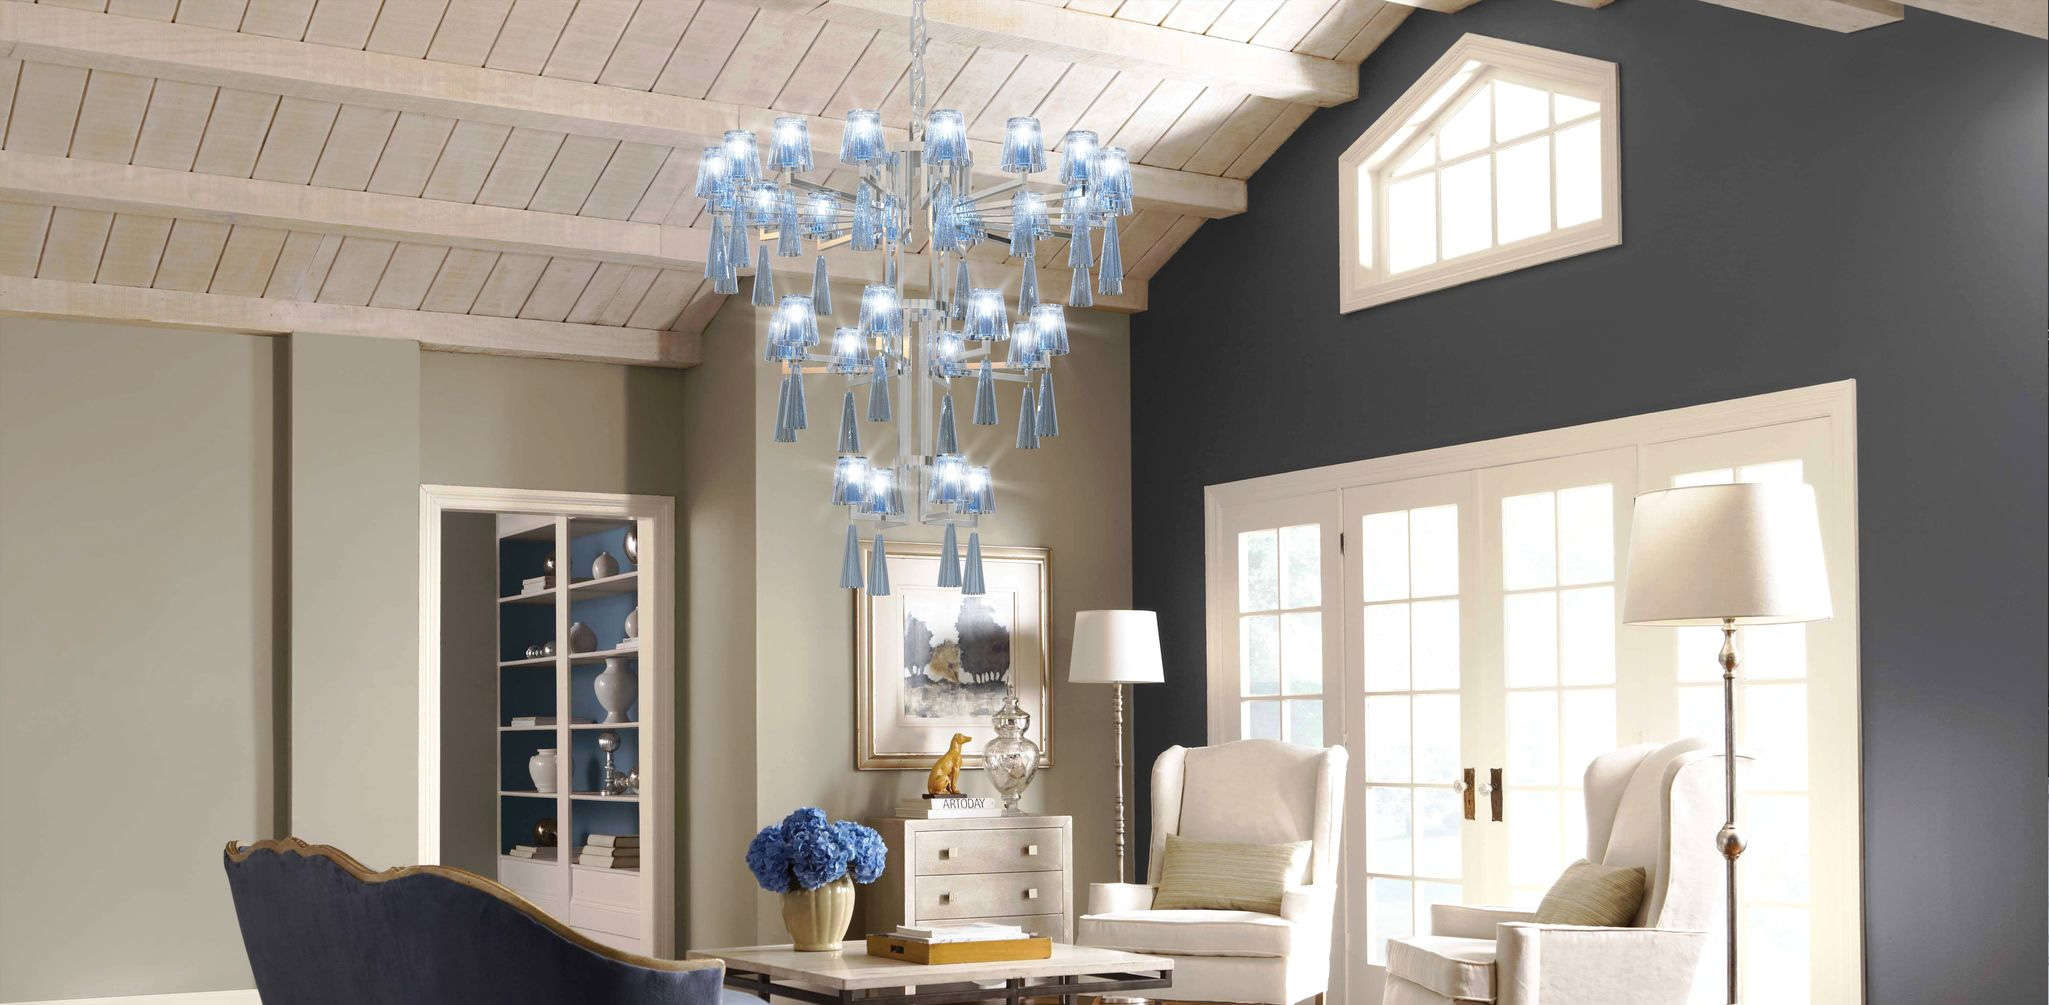 Luxury blue glass/metal chandelier in light modern interior